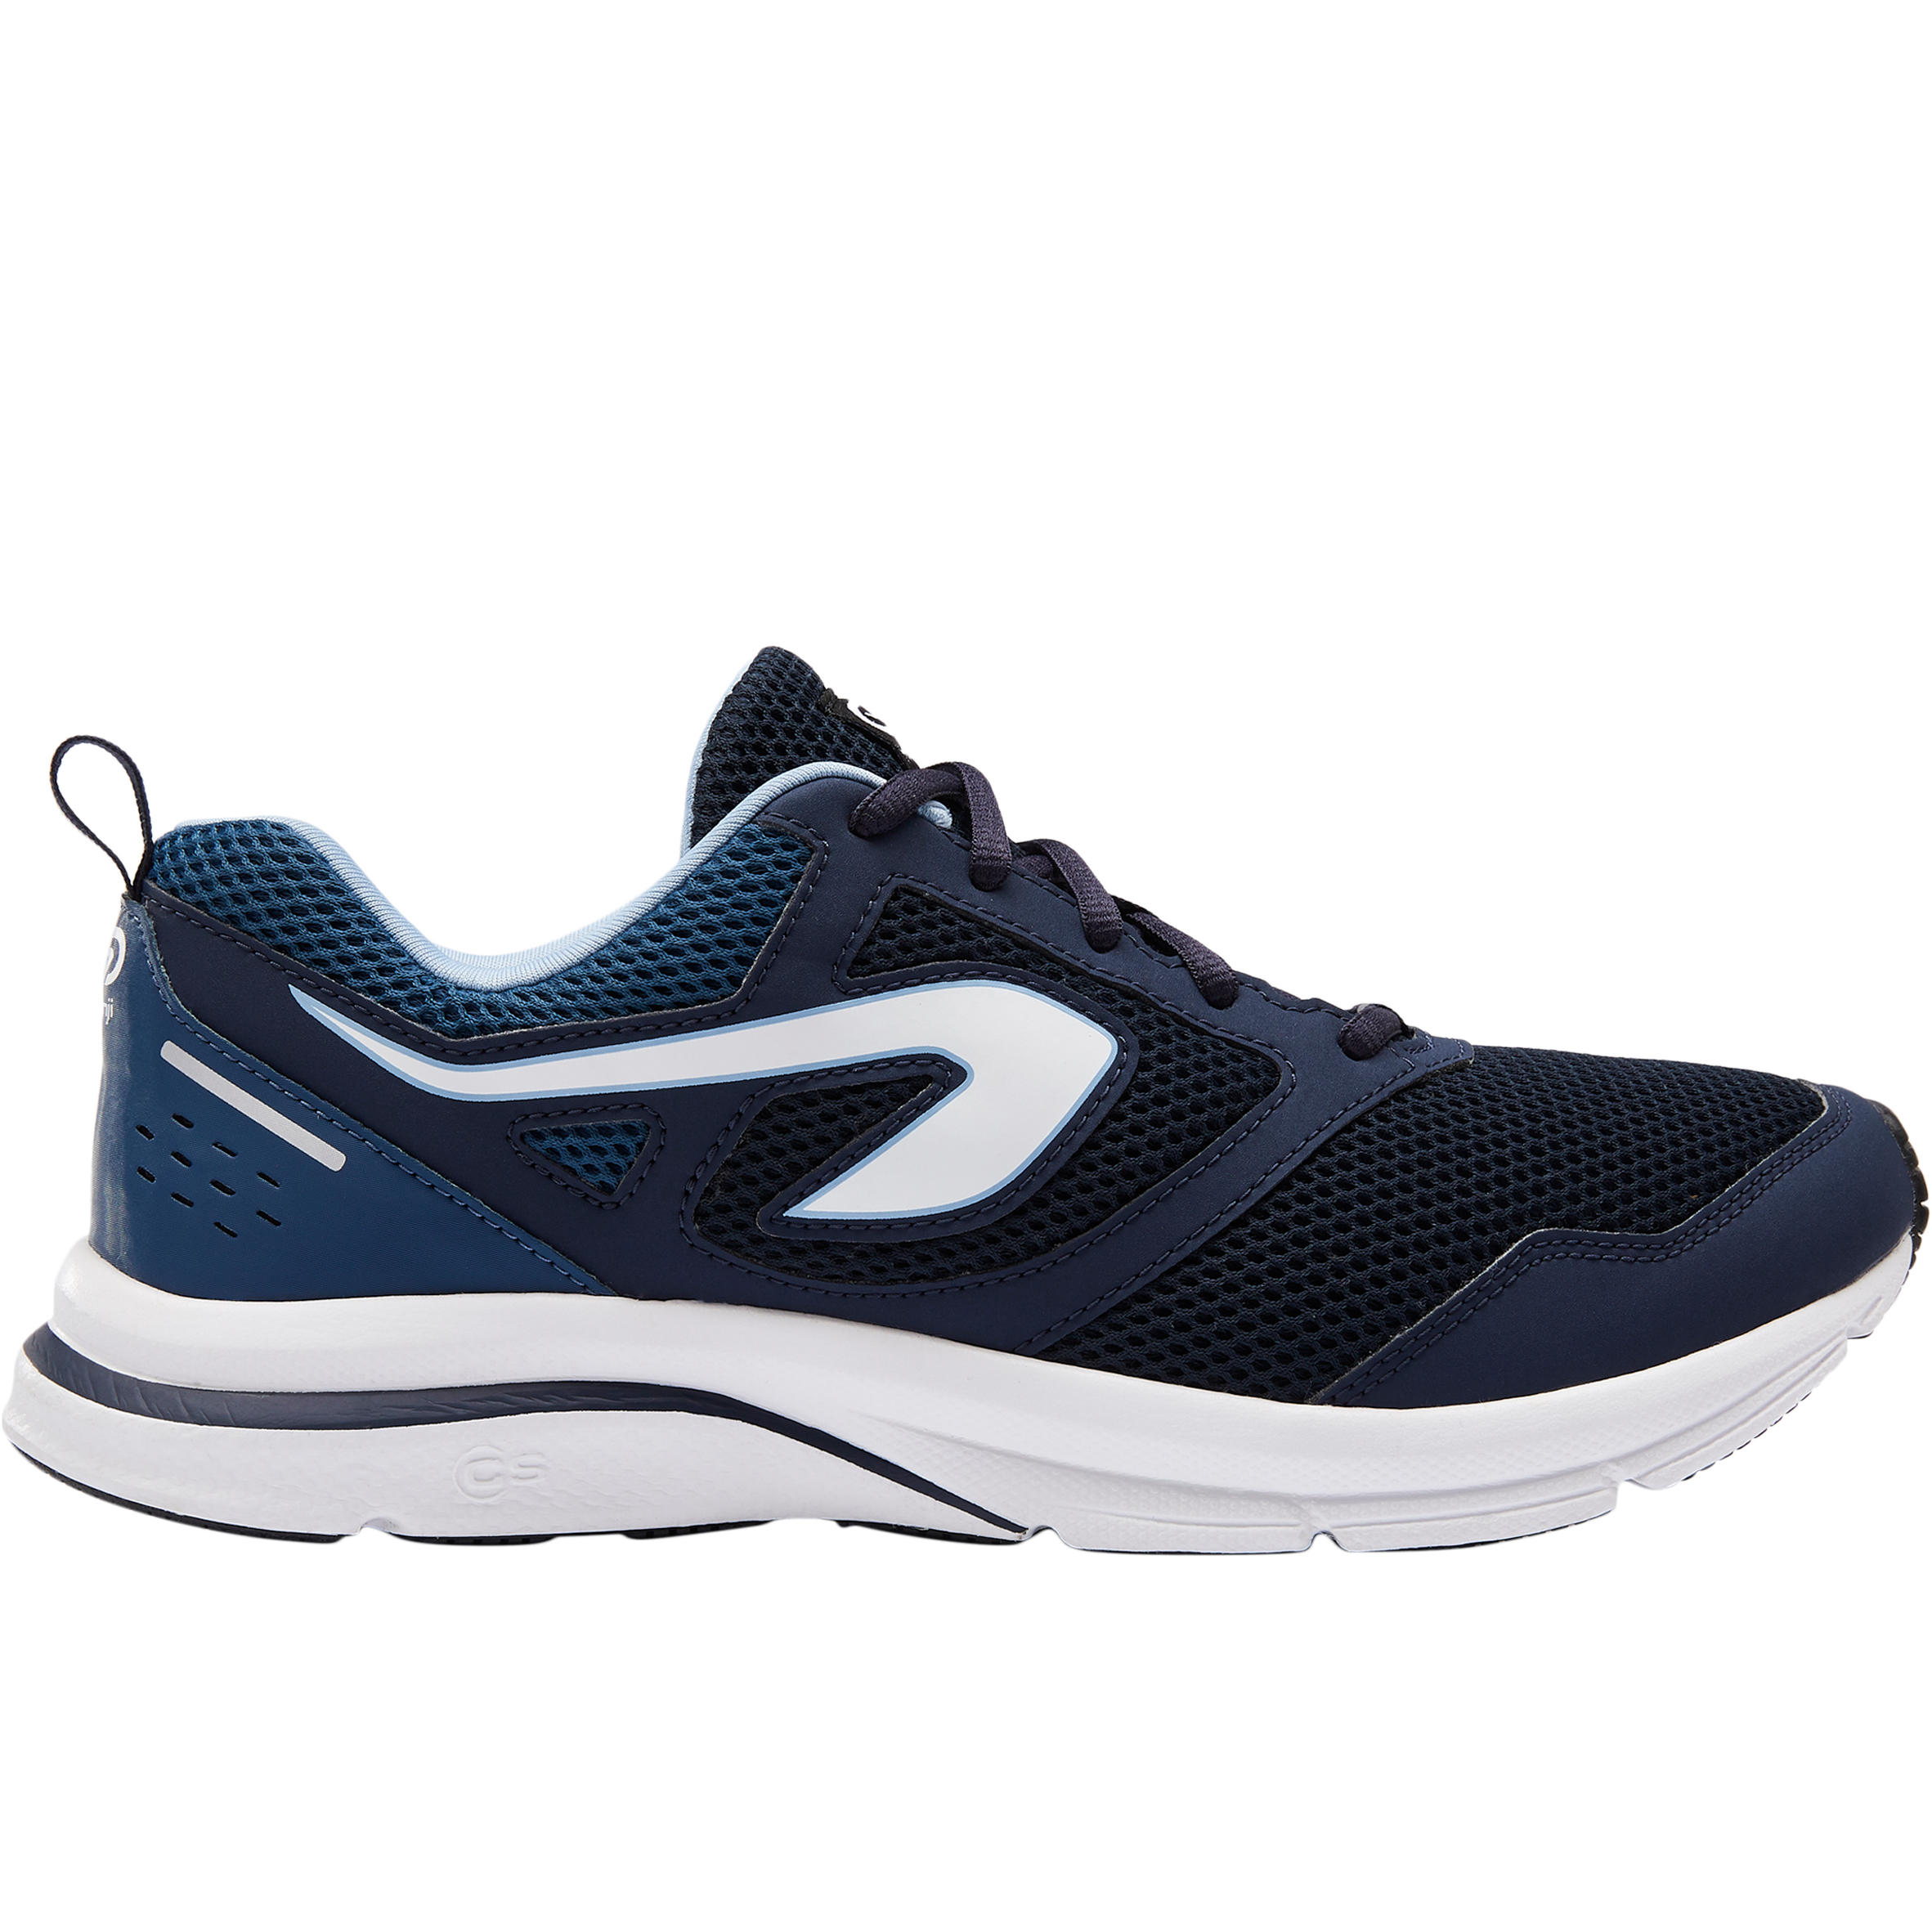 decathlon sports shoes online